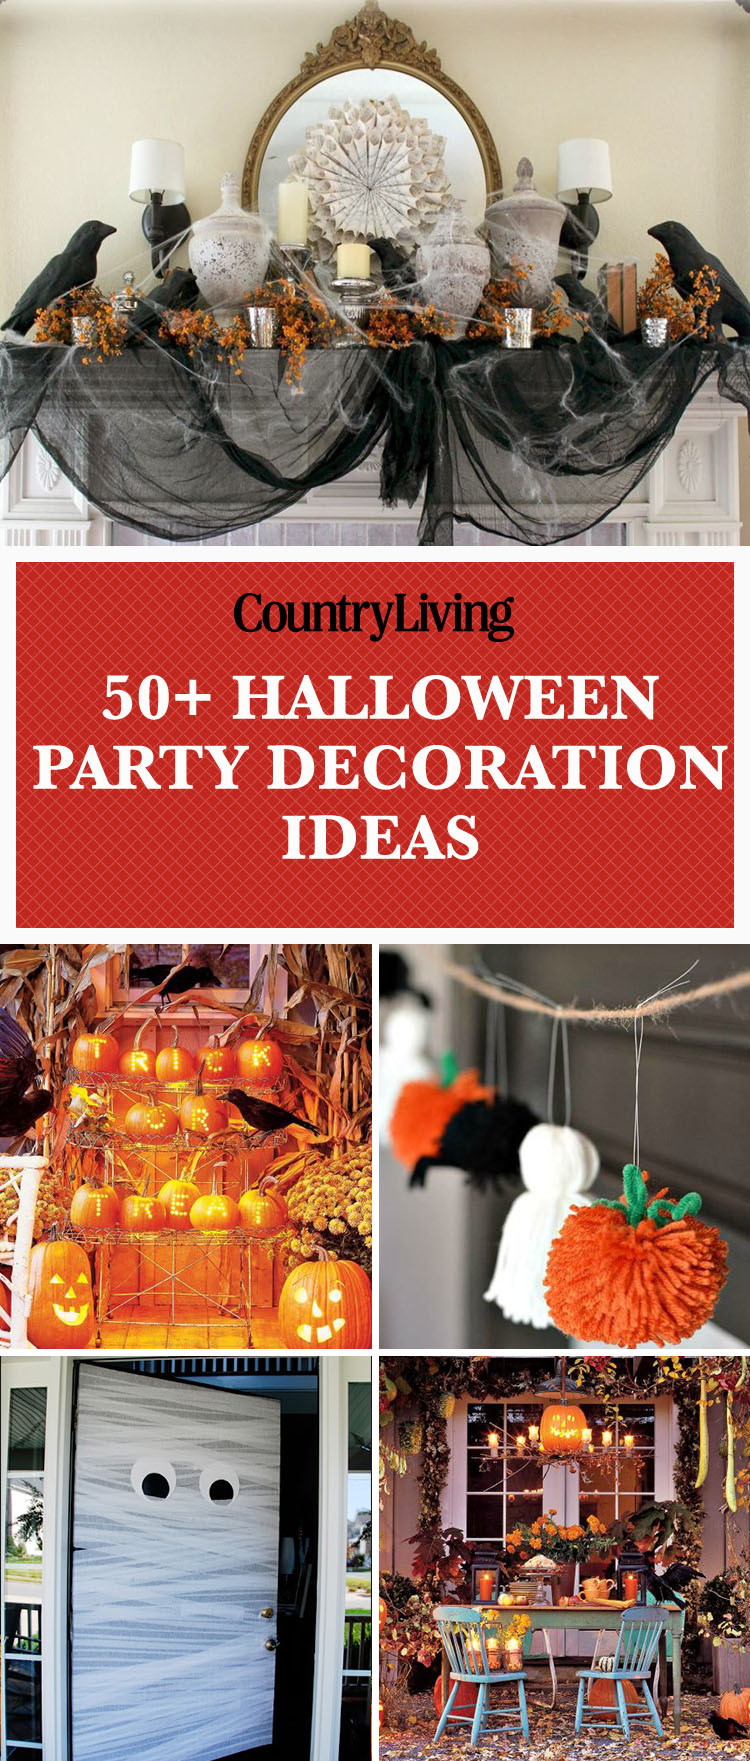 Halloween Party Decorating Ideas
 56 Fun Halloween Party Decorating Ideas Spooky Halloween